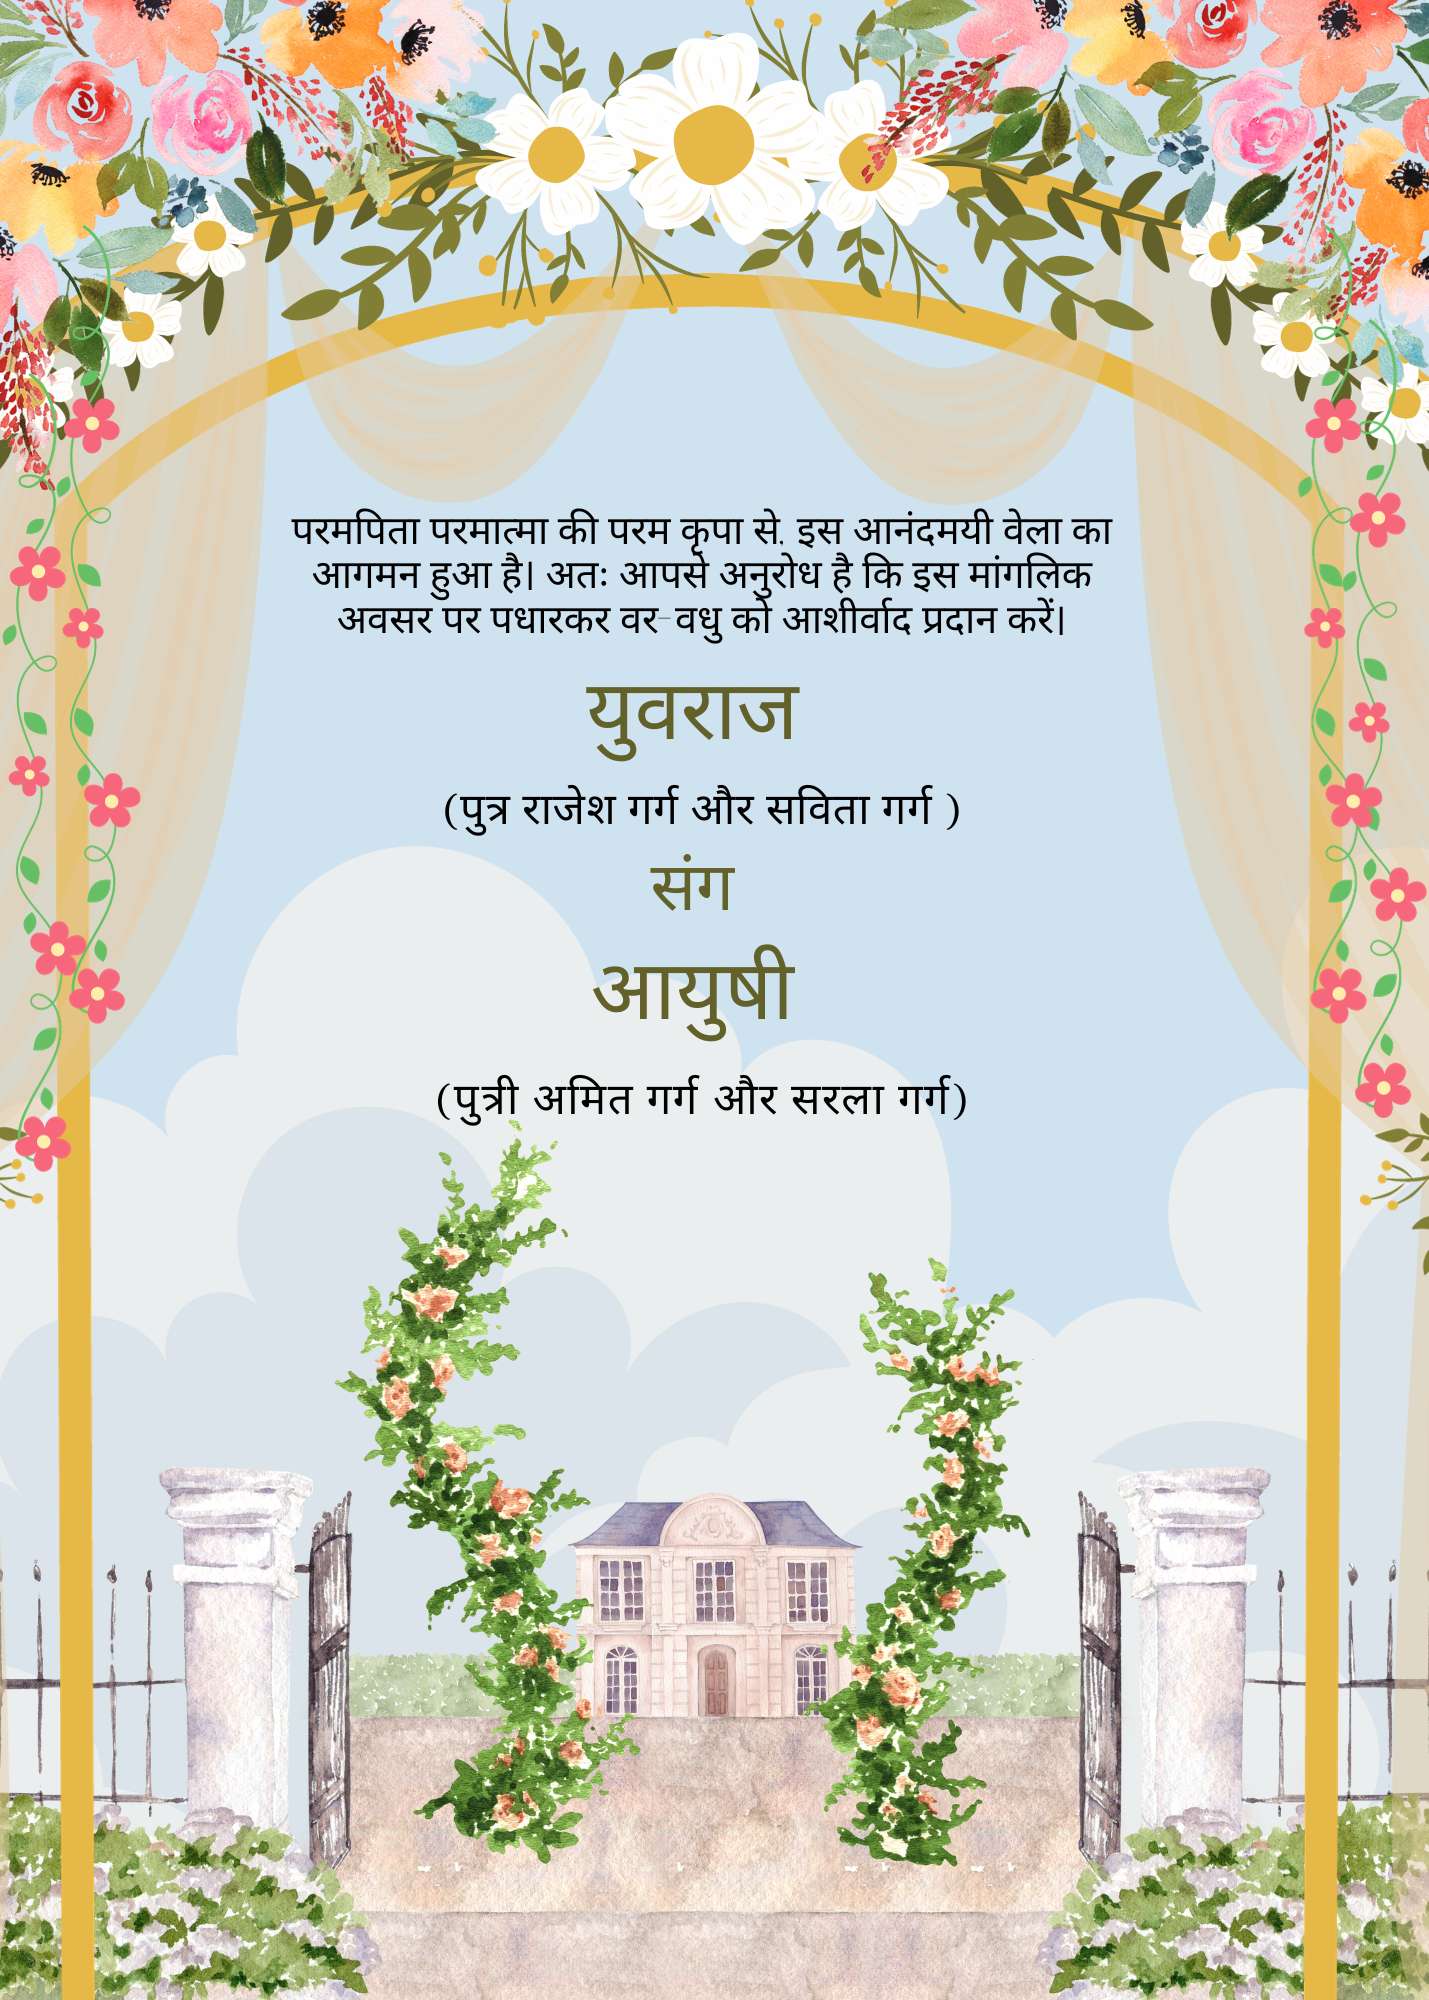 Hindi wedding card design